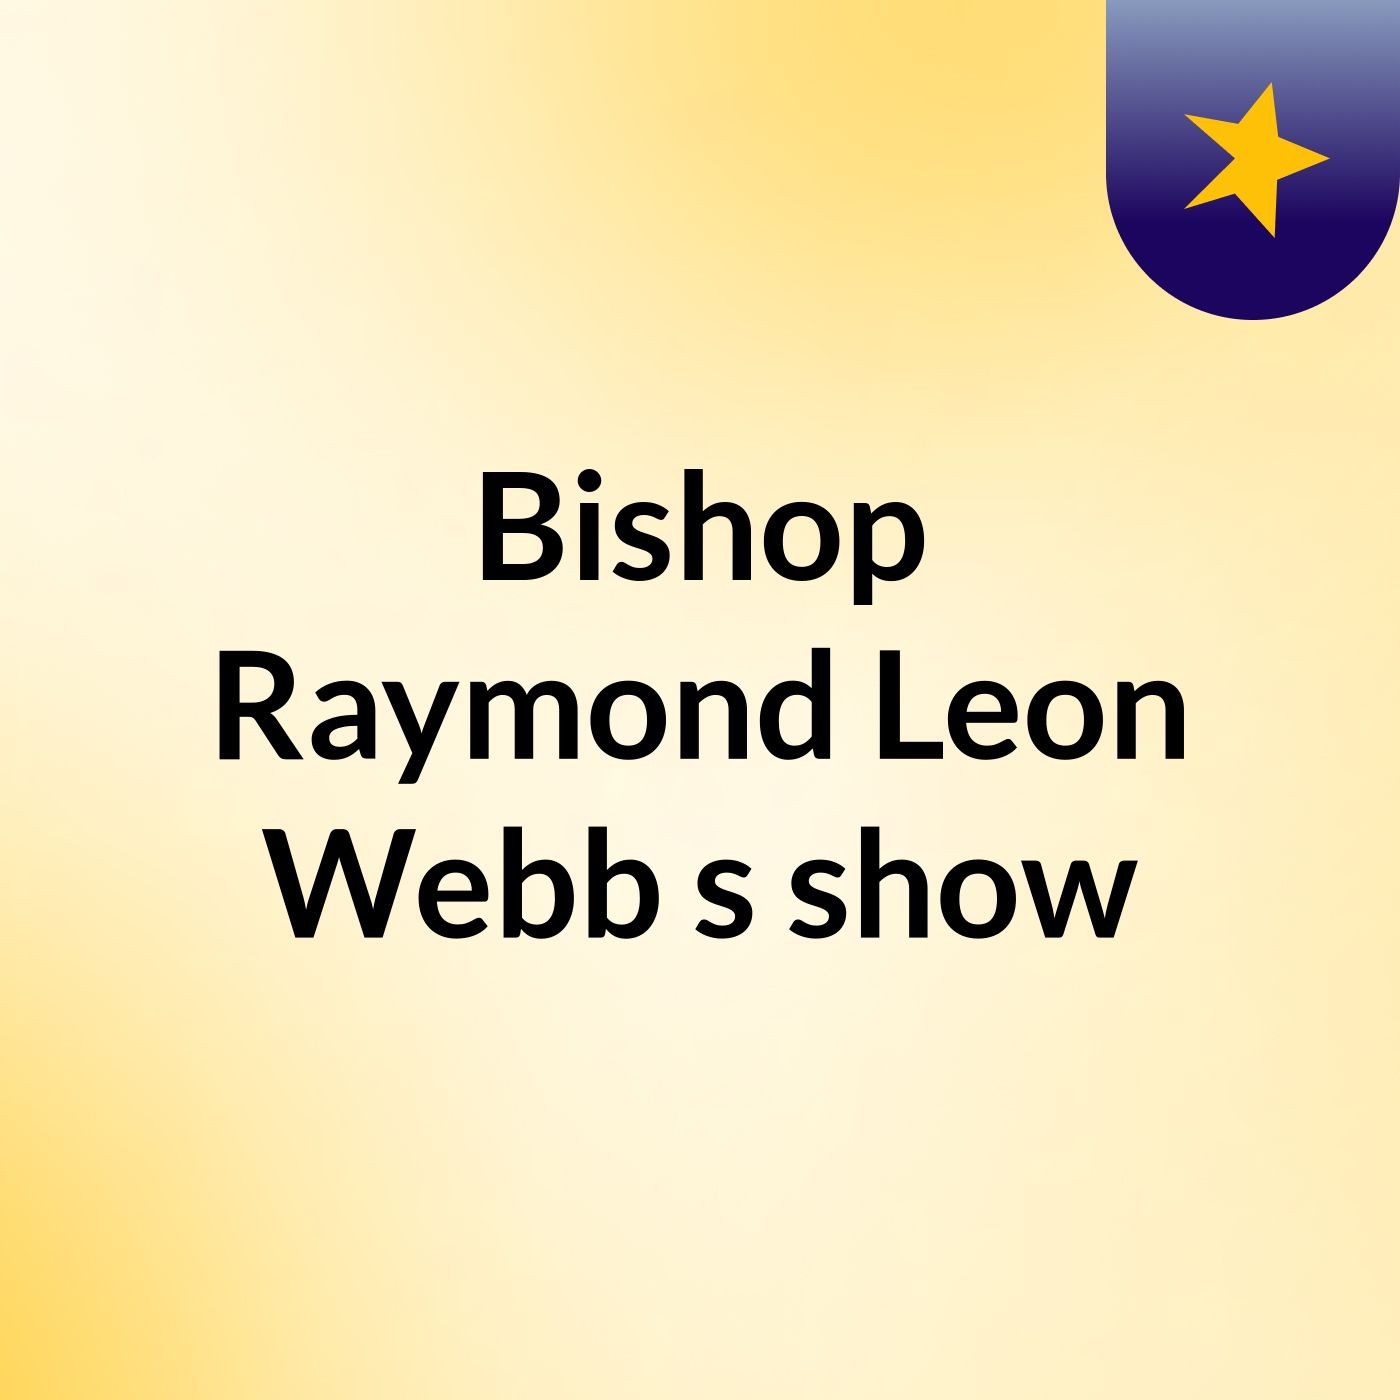 Bishop Raymond Leon Webb's show